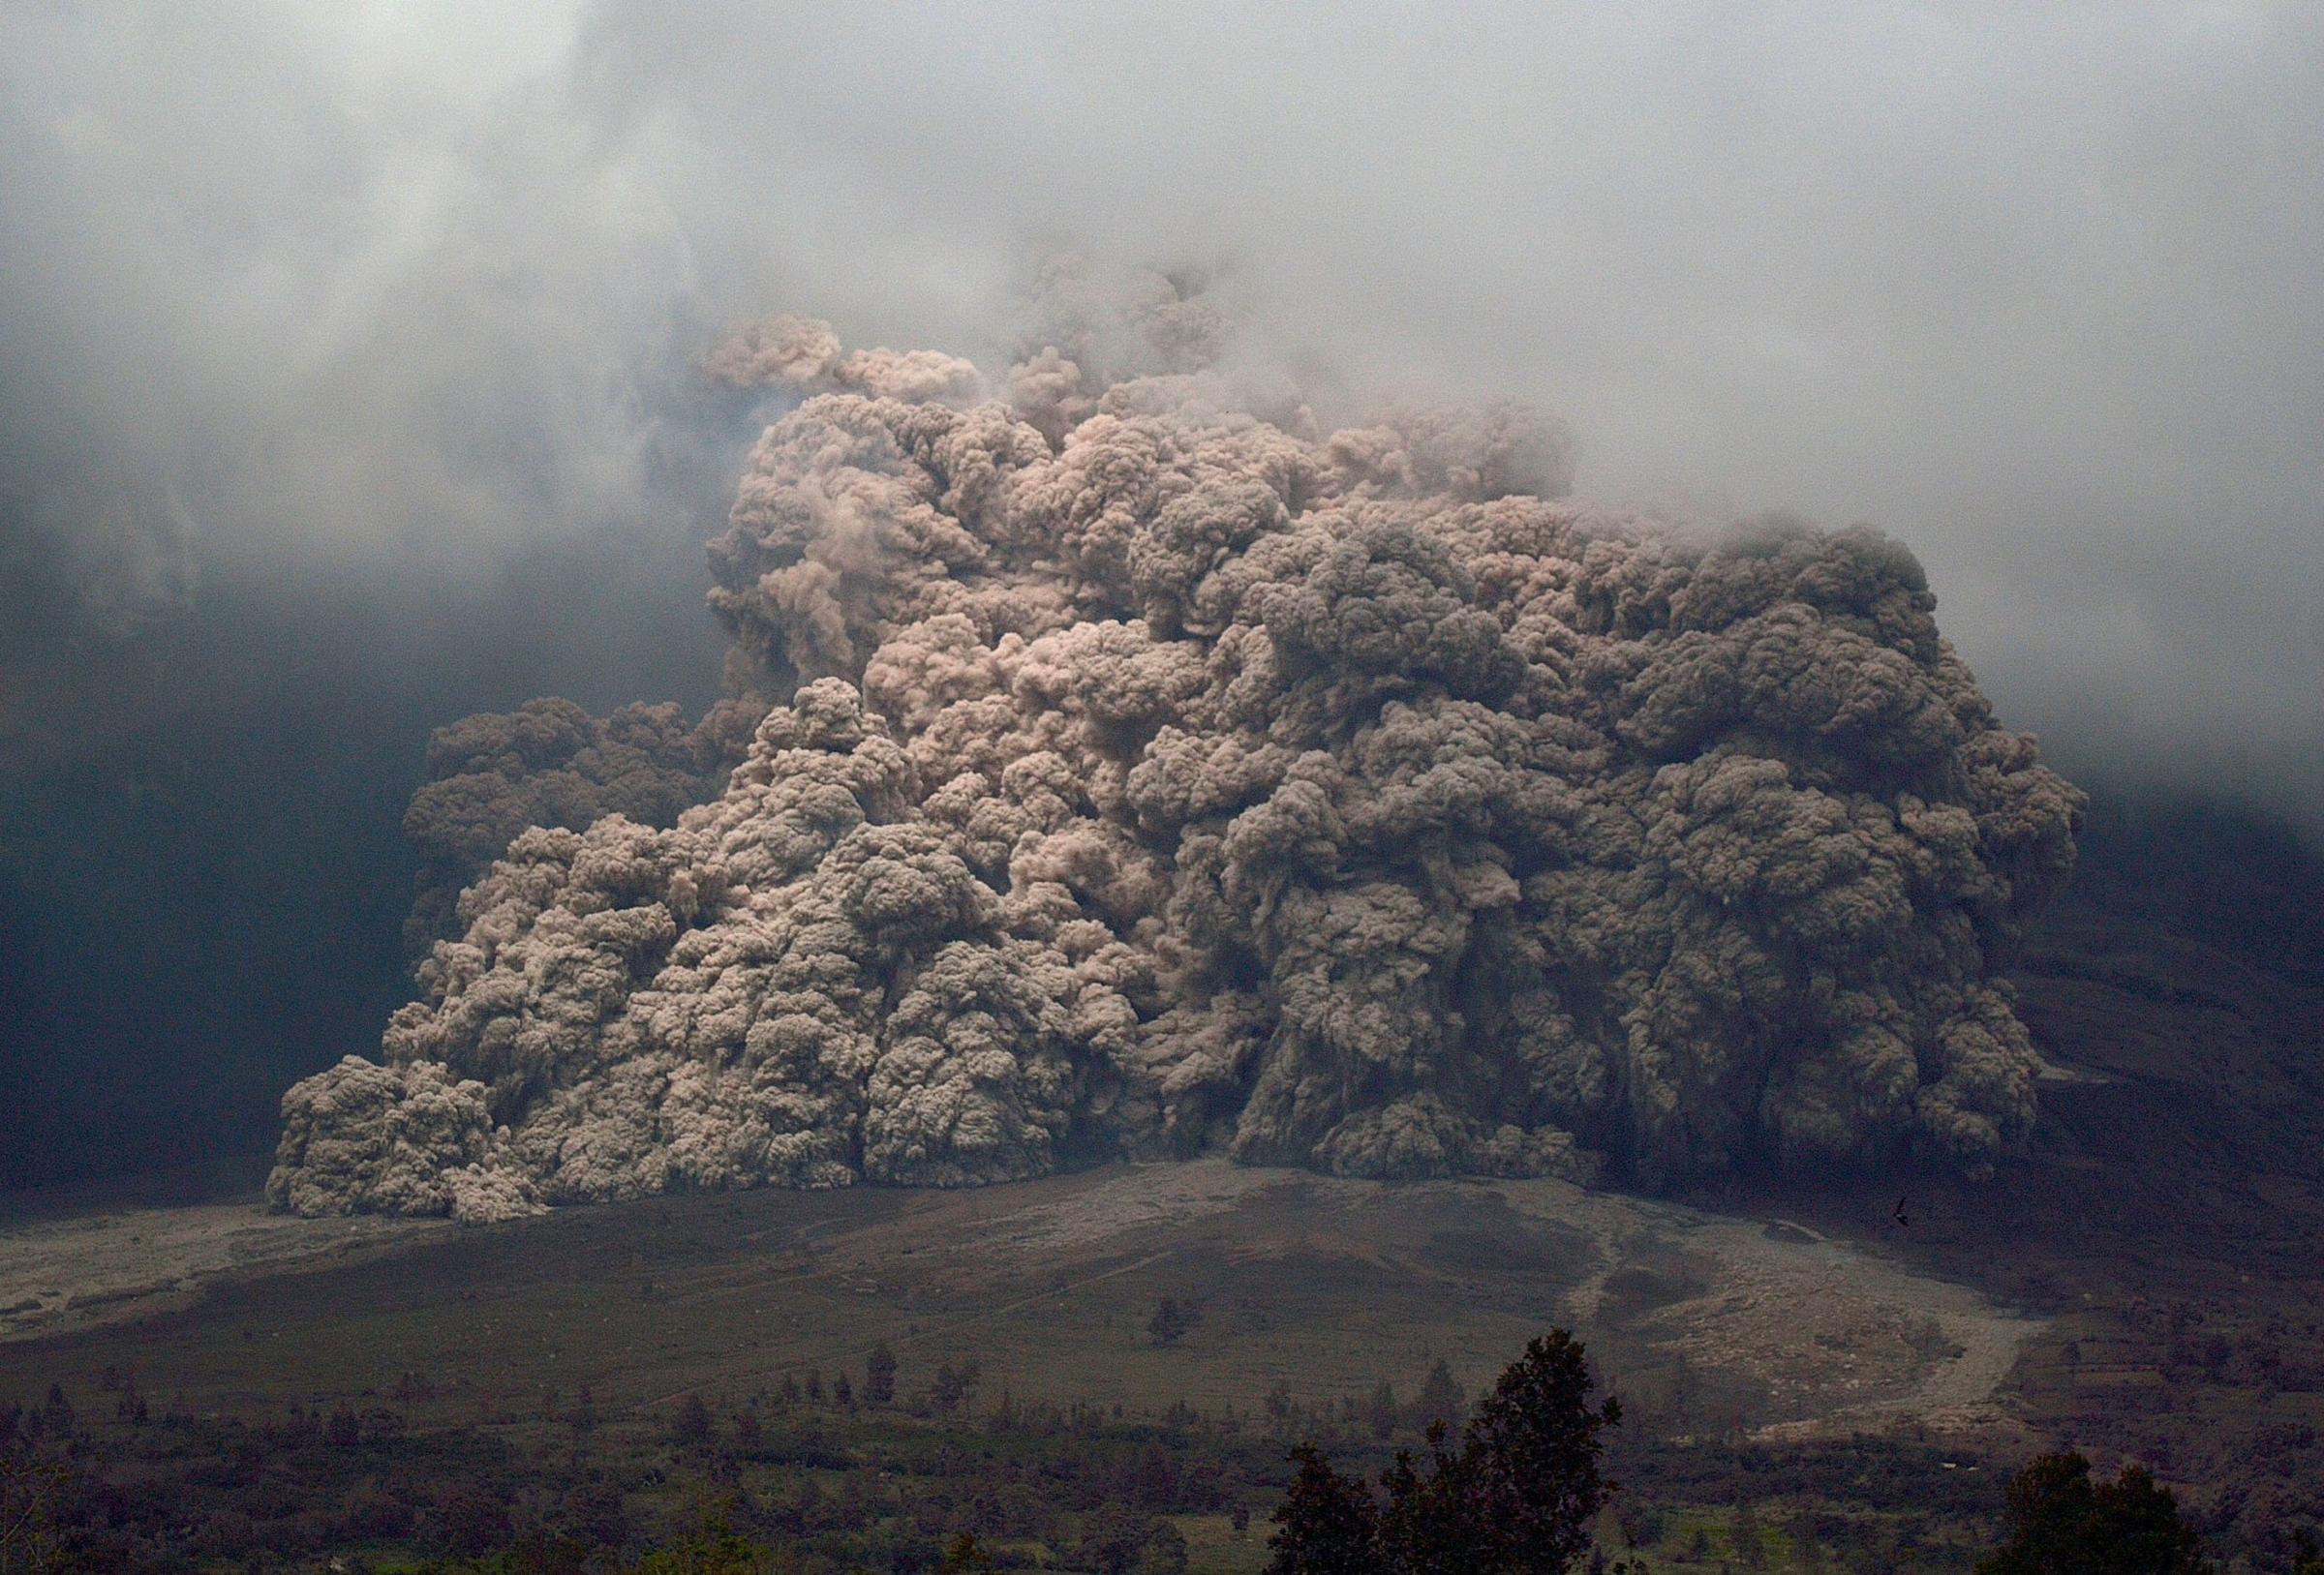 Sinabung mount spews ash to the air during an eruption near Karo, North Sumatra, Indonesia, Jan. 7, 2014.